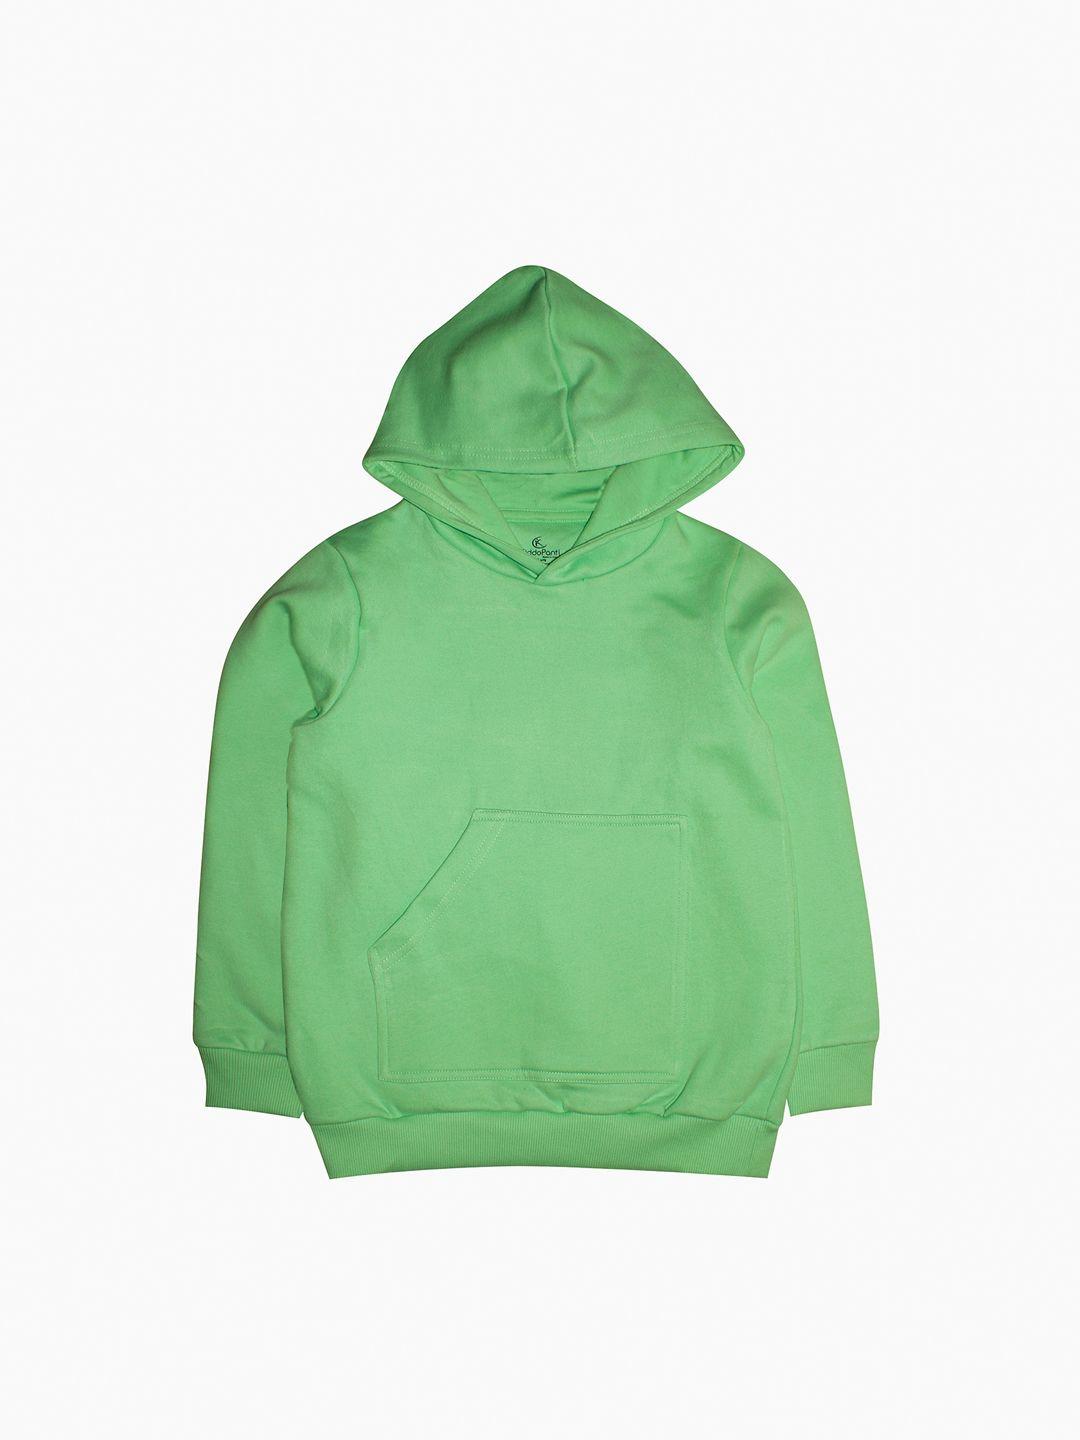 kiddopanti-unisex-kids-green-hooded-sweatshirt